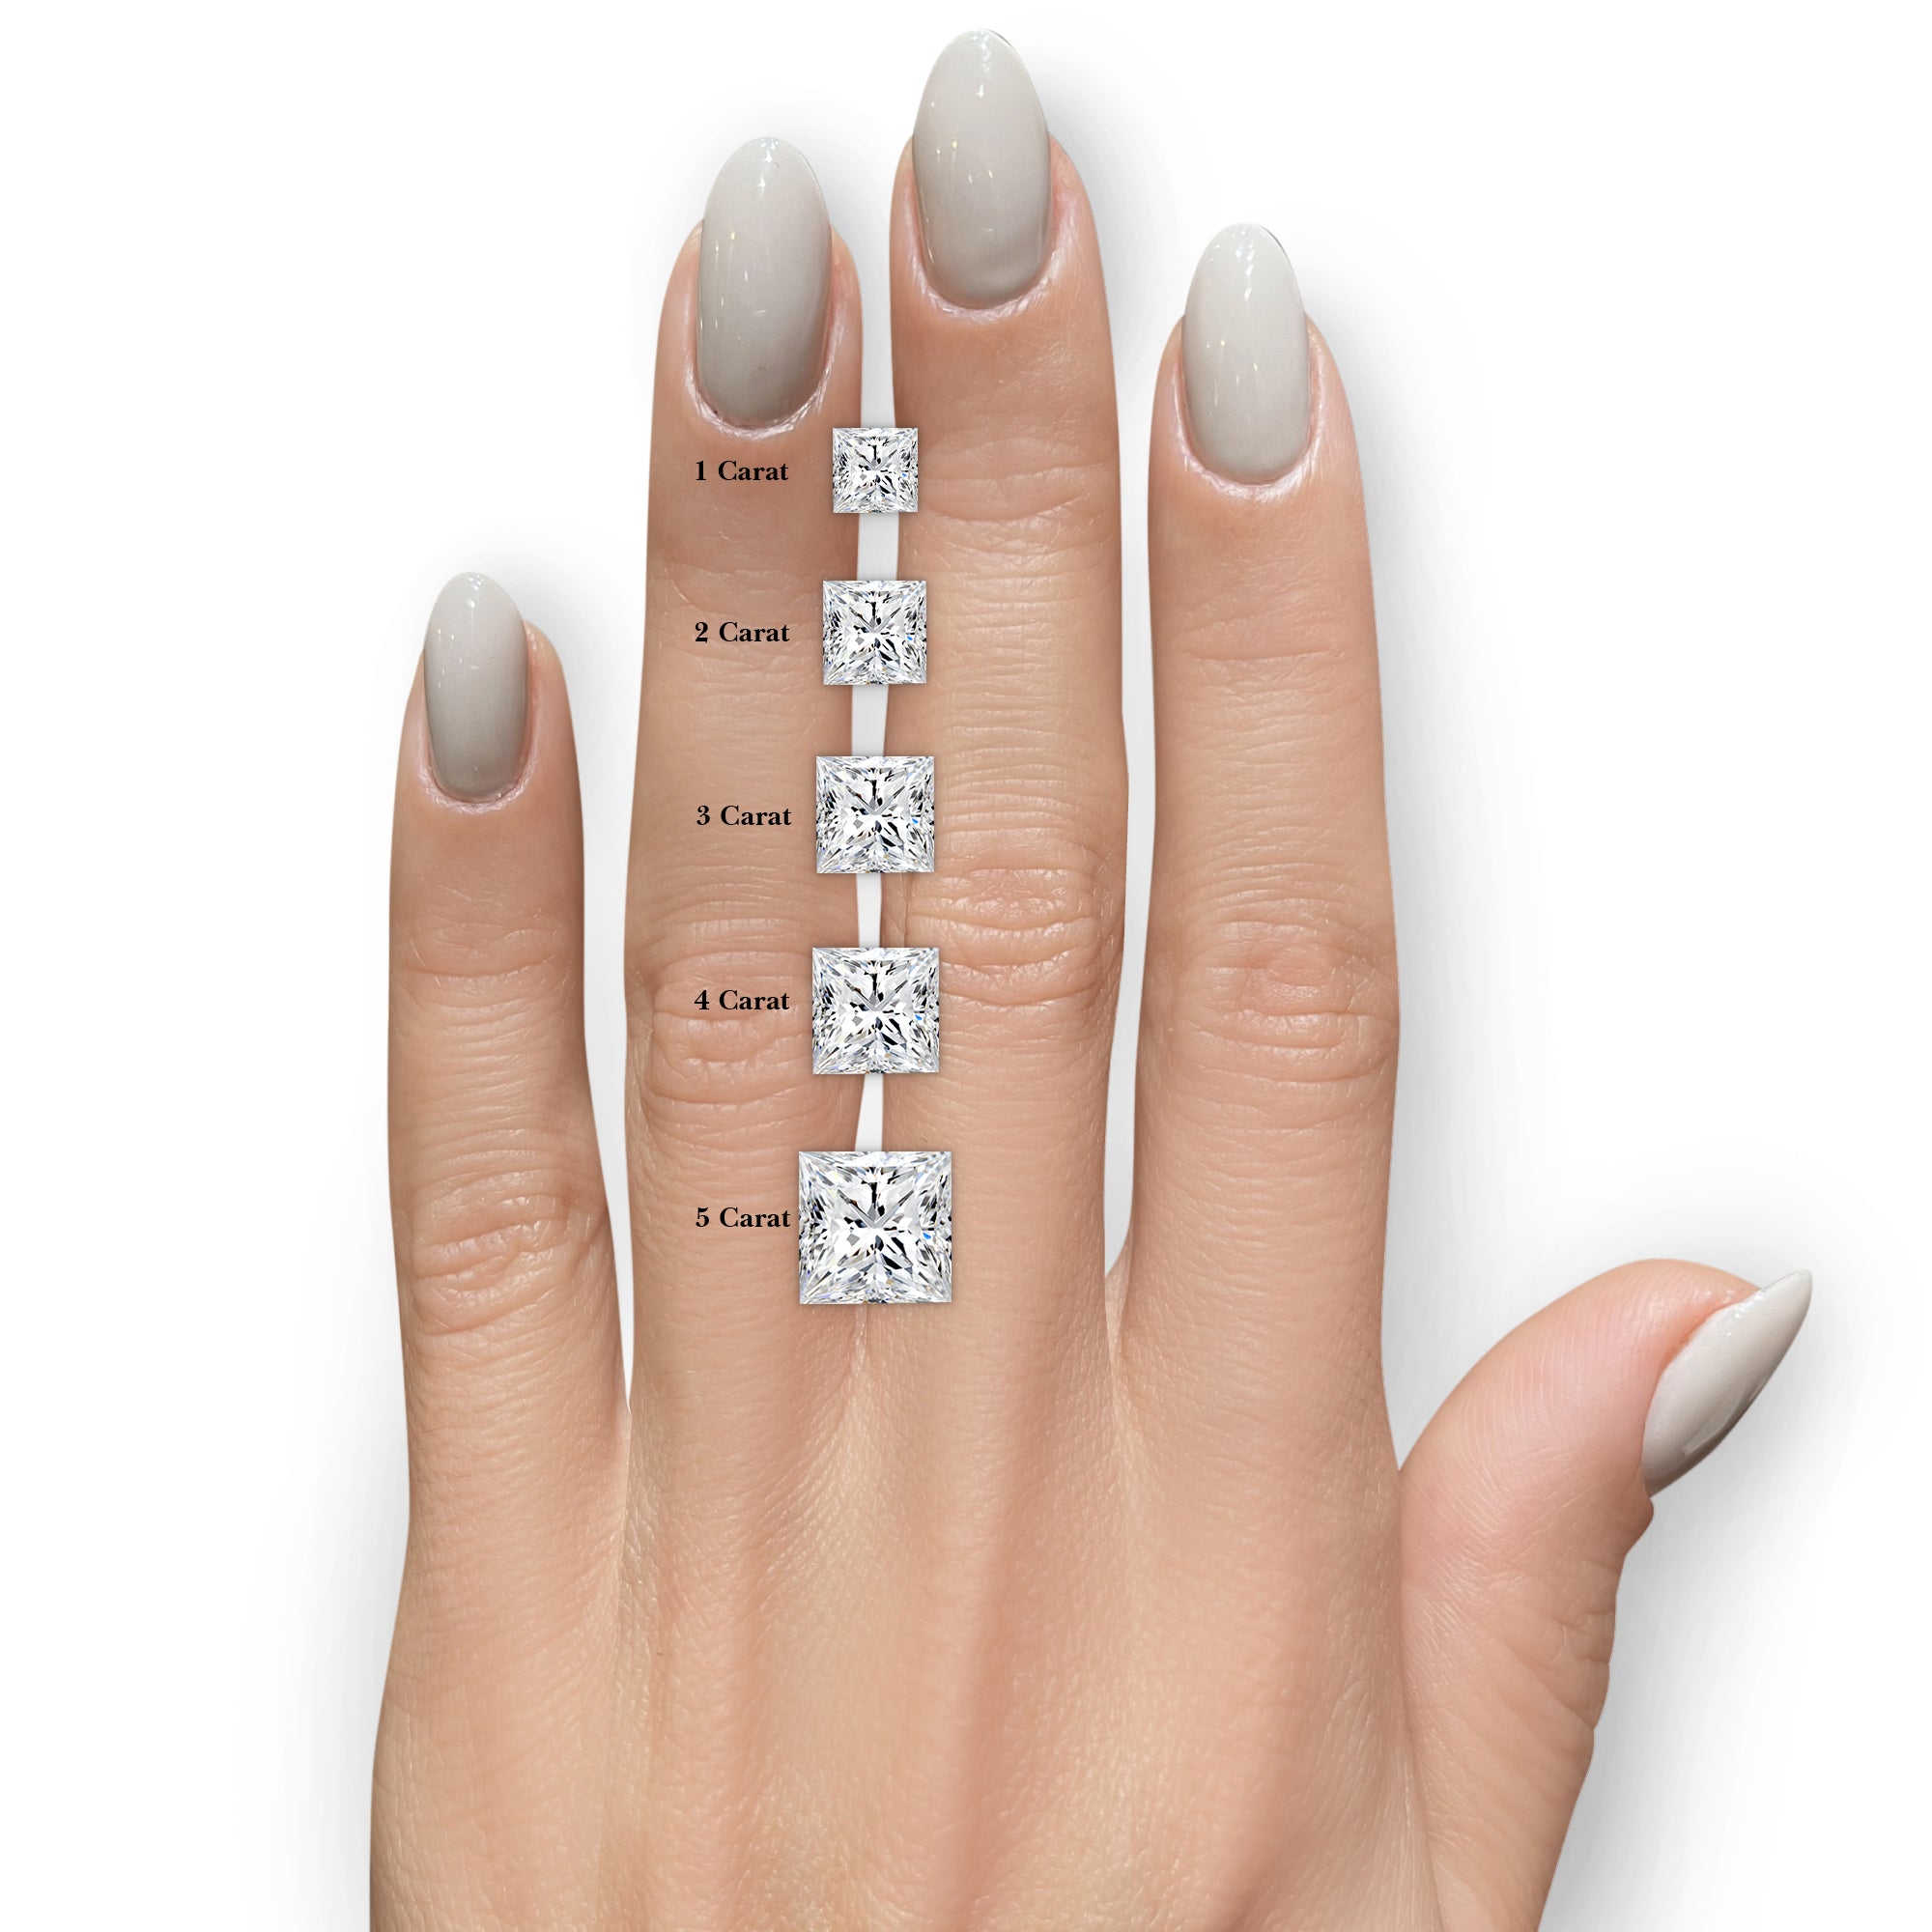 Stephanie Diamond Engagement Ring -18K White Gold